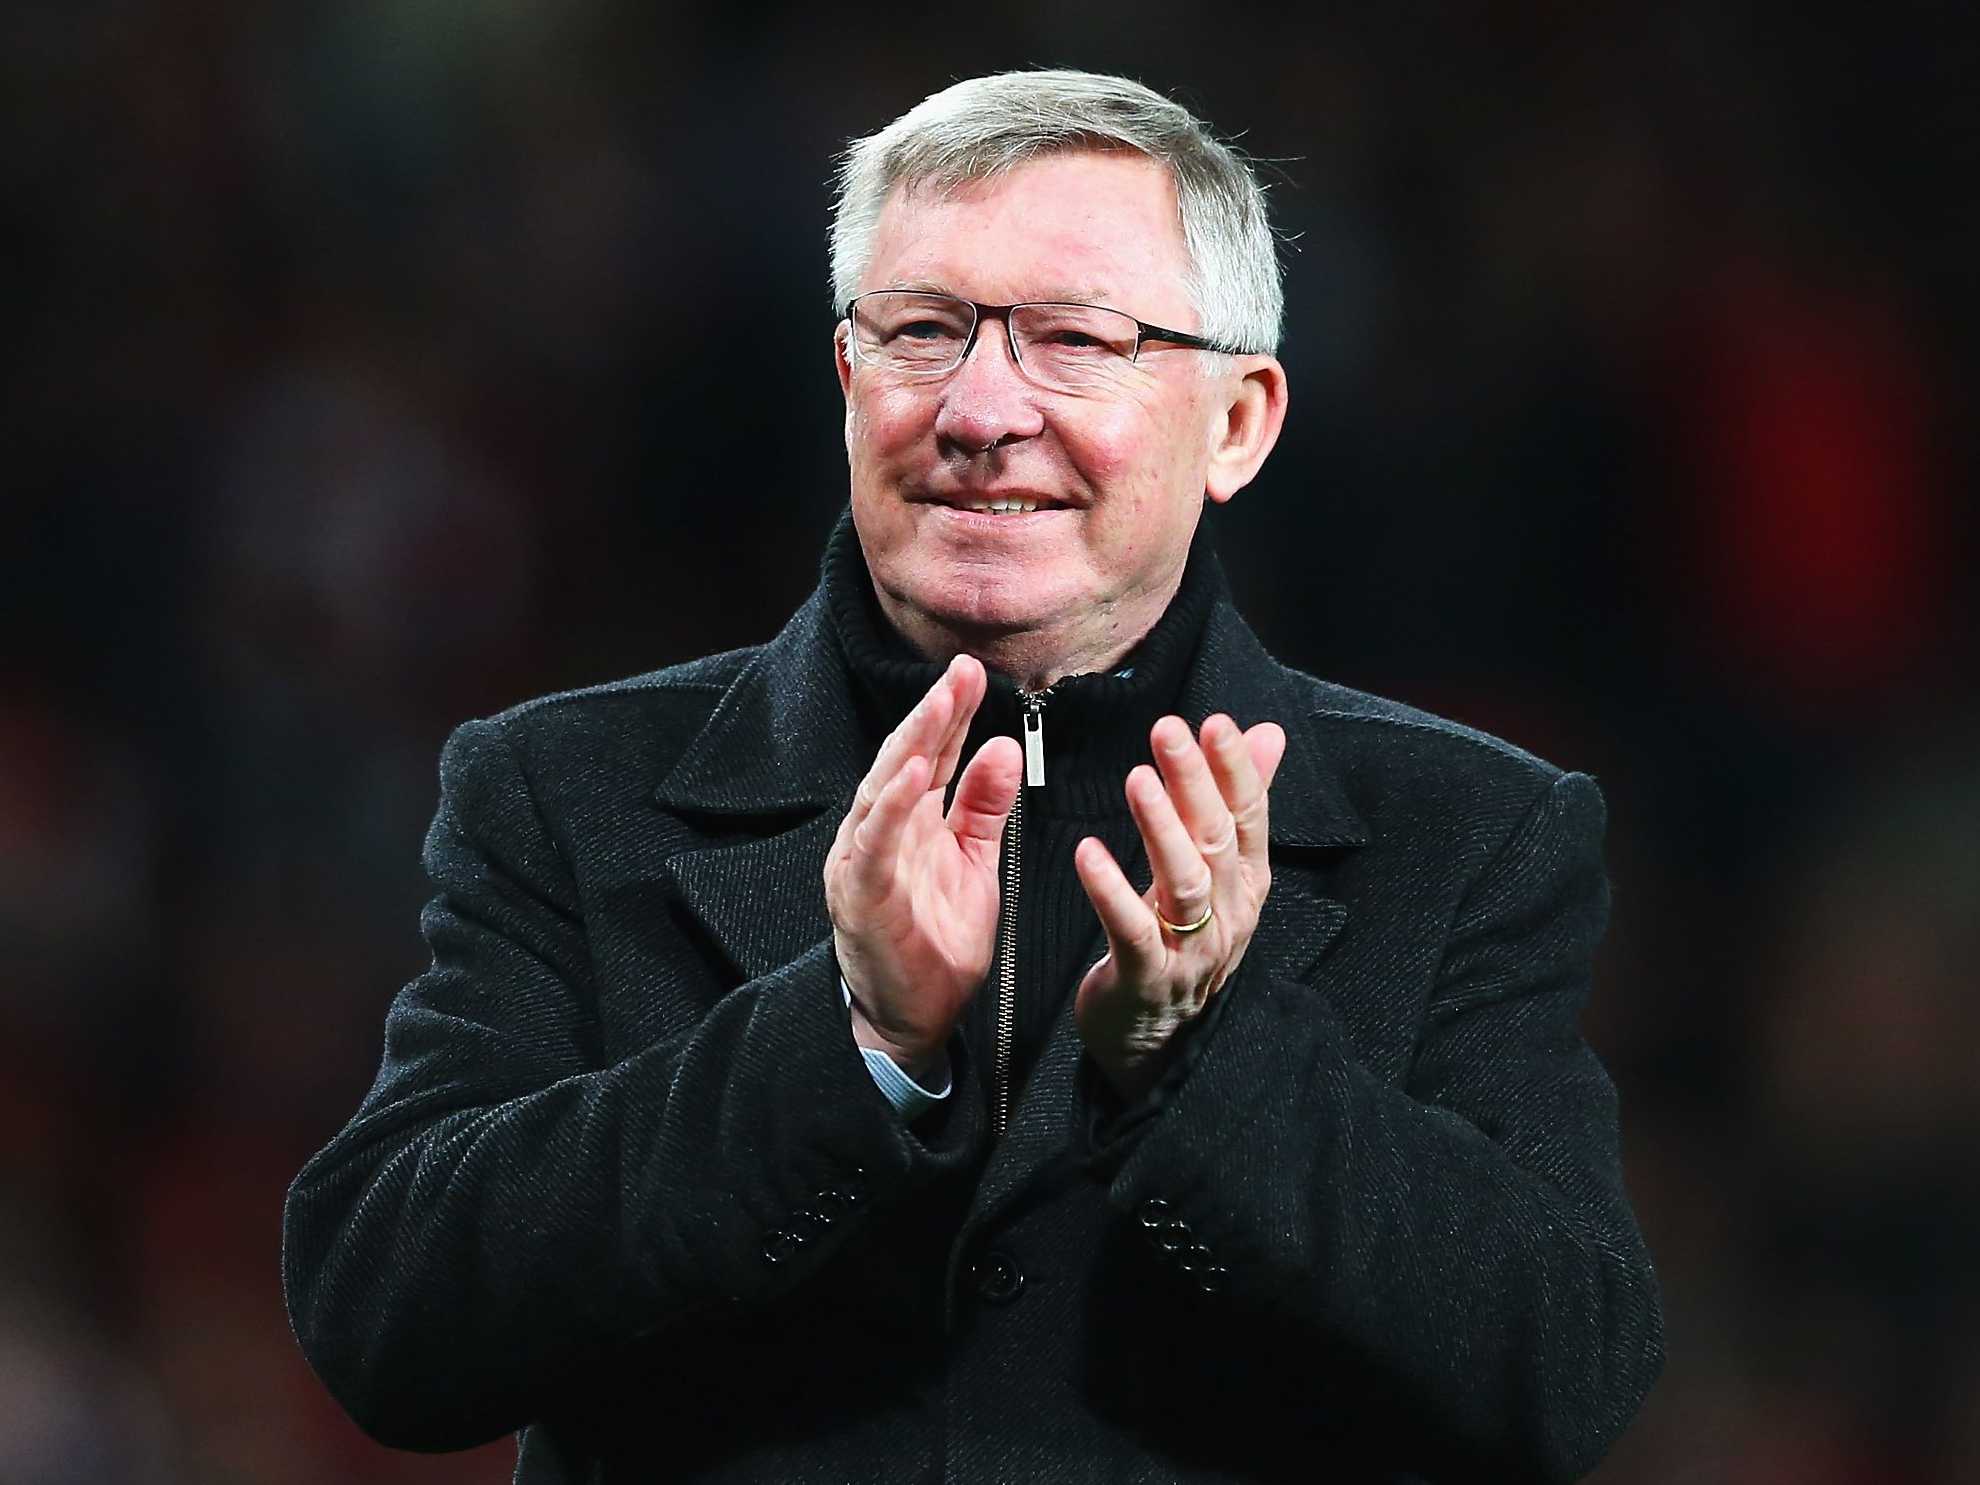 Former Manchester United manager Sir Alex Ferguson 